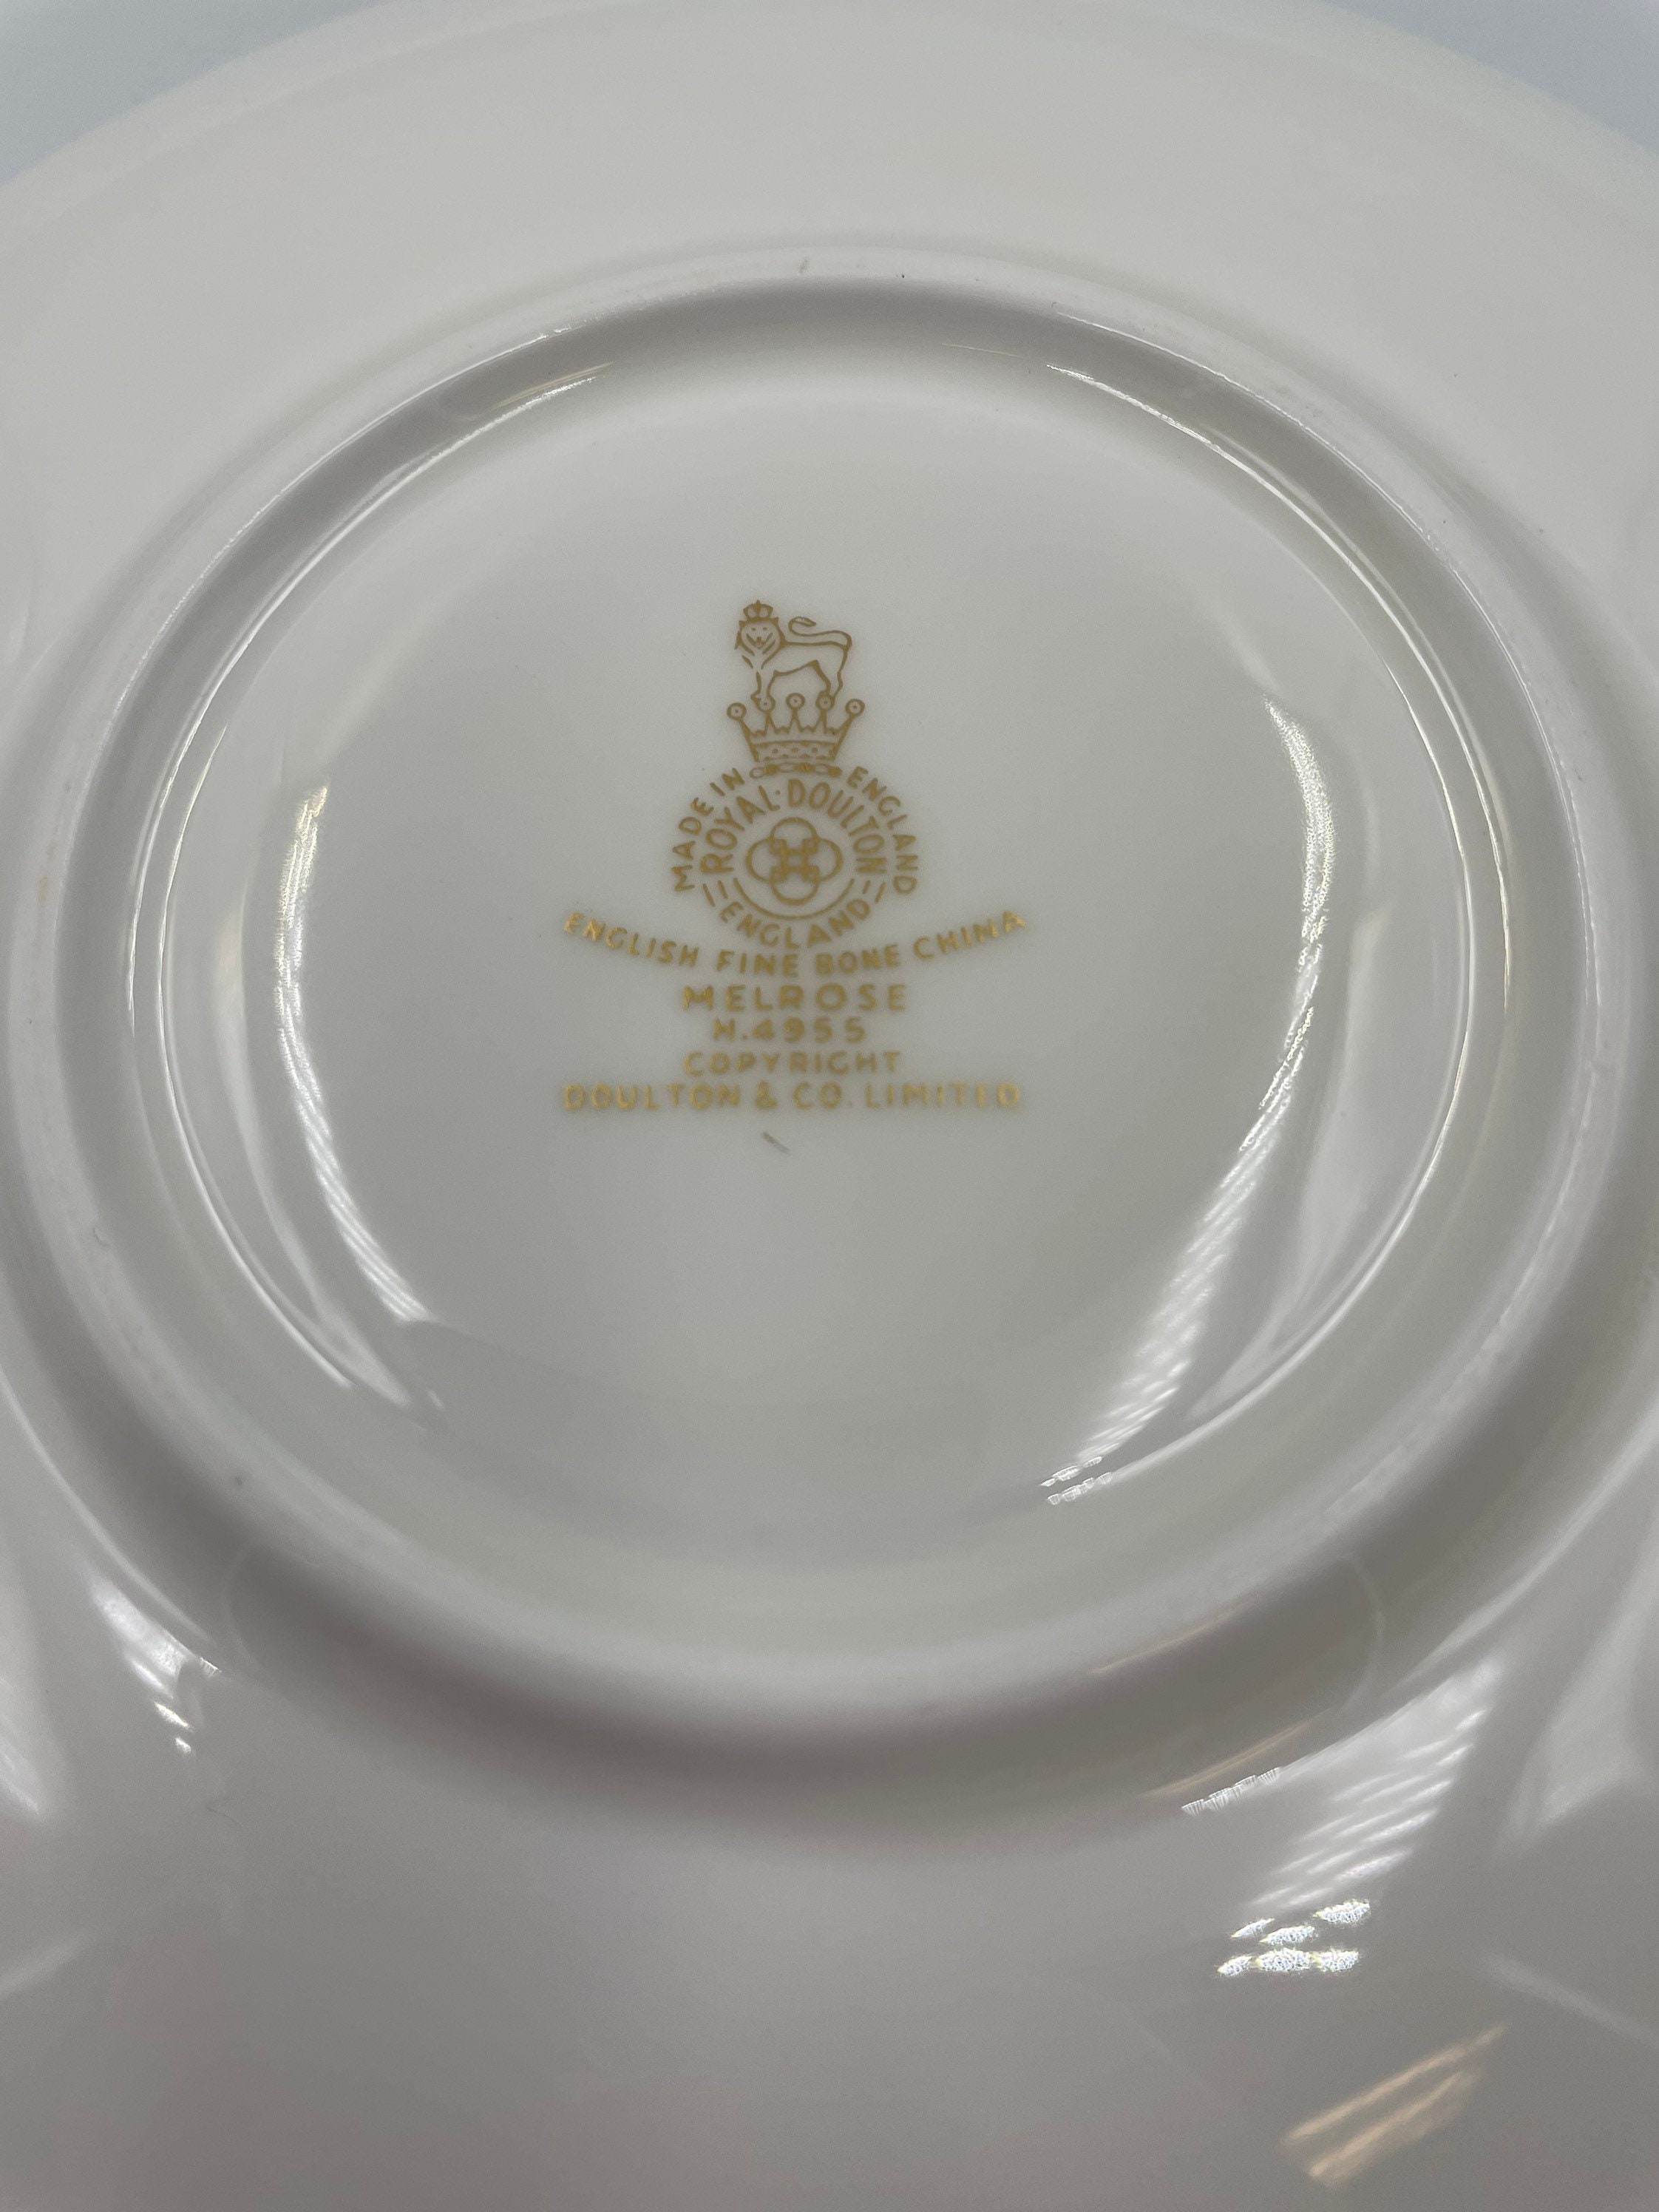 Royal Doulton Melrose - China Made in England